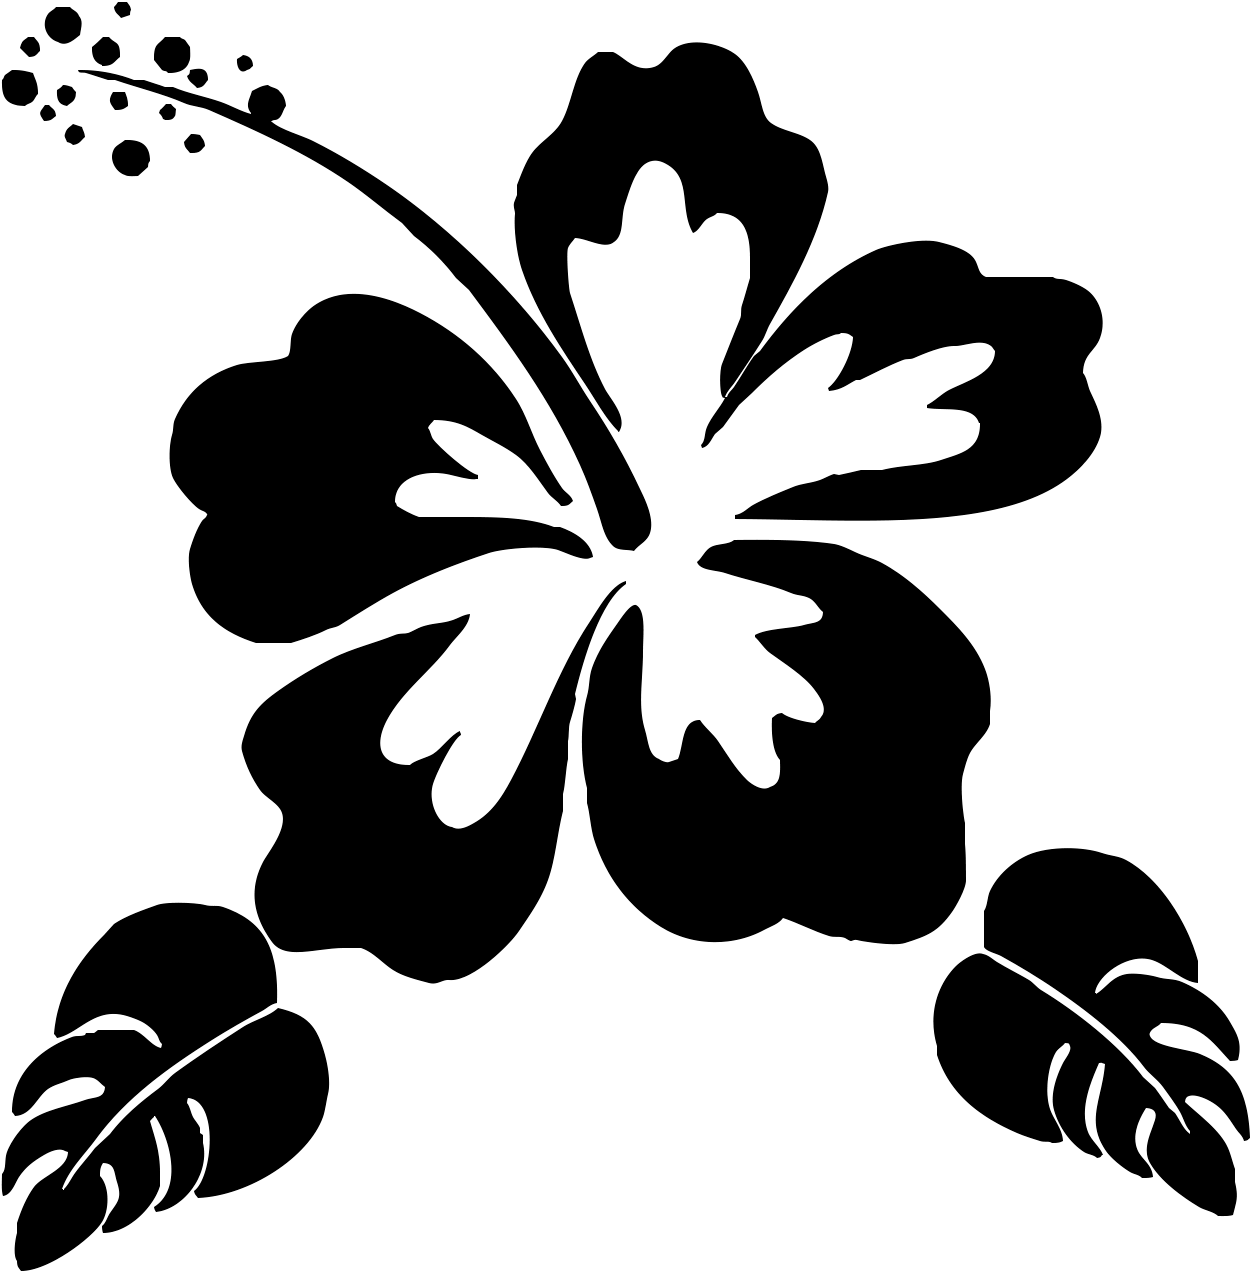 Silhouette Flower Stencil Clip art - Hawaii flower png download - 1250*